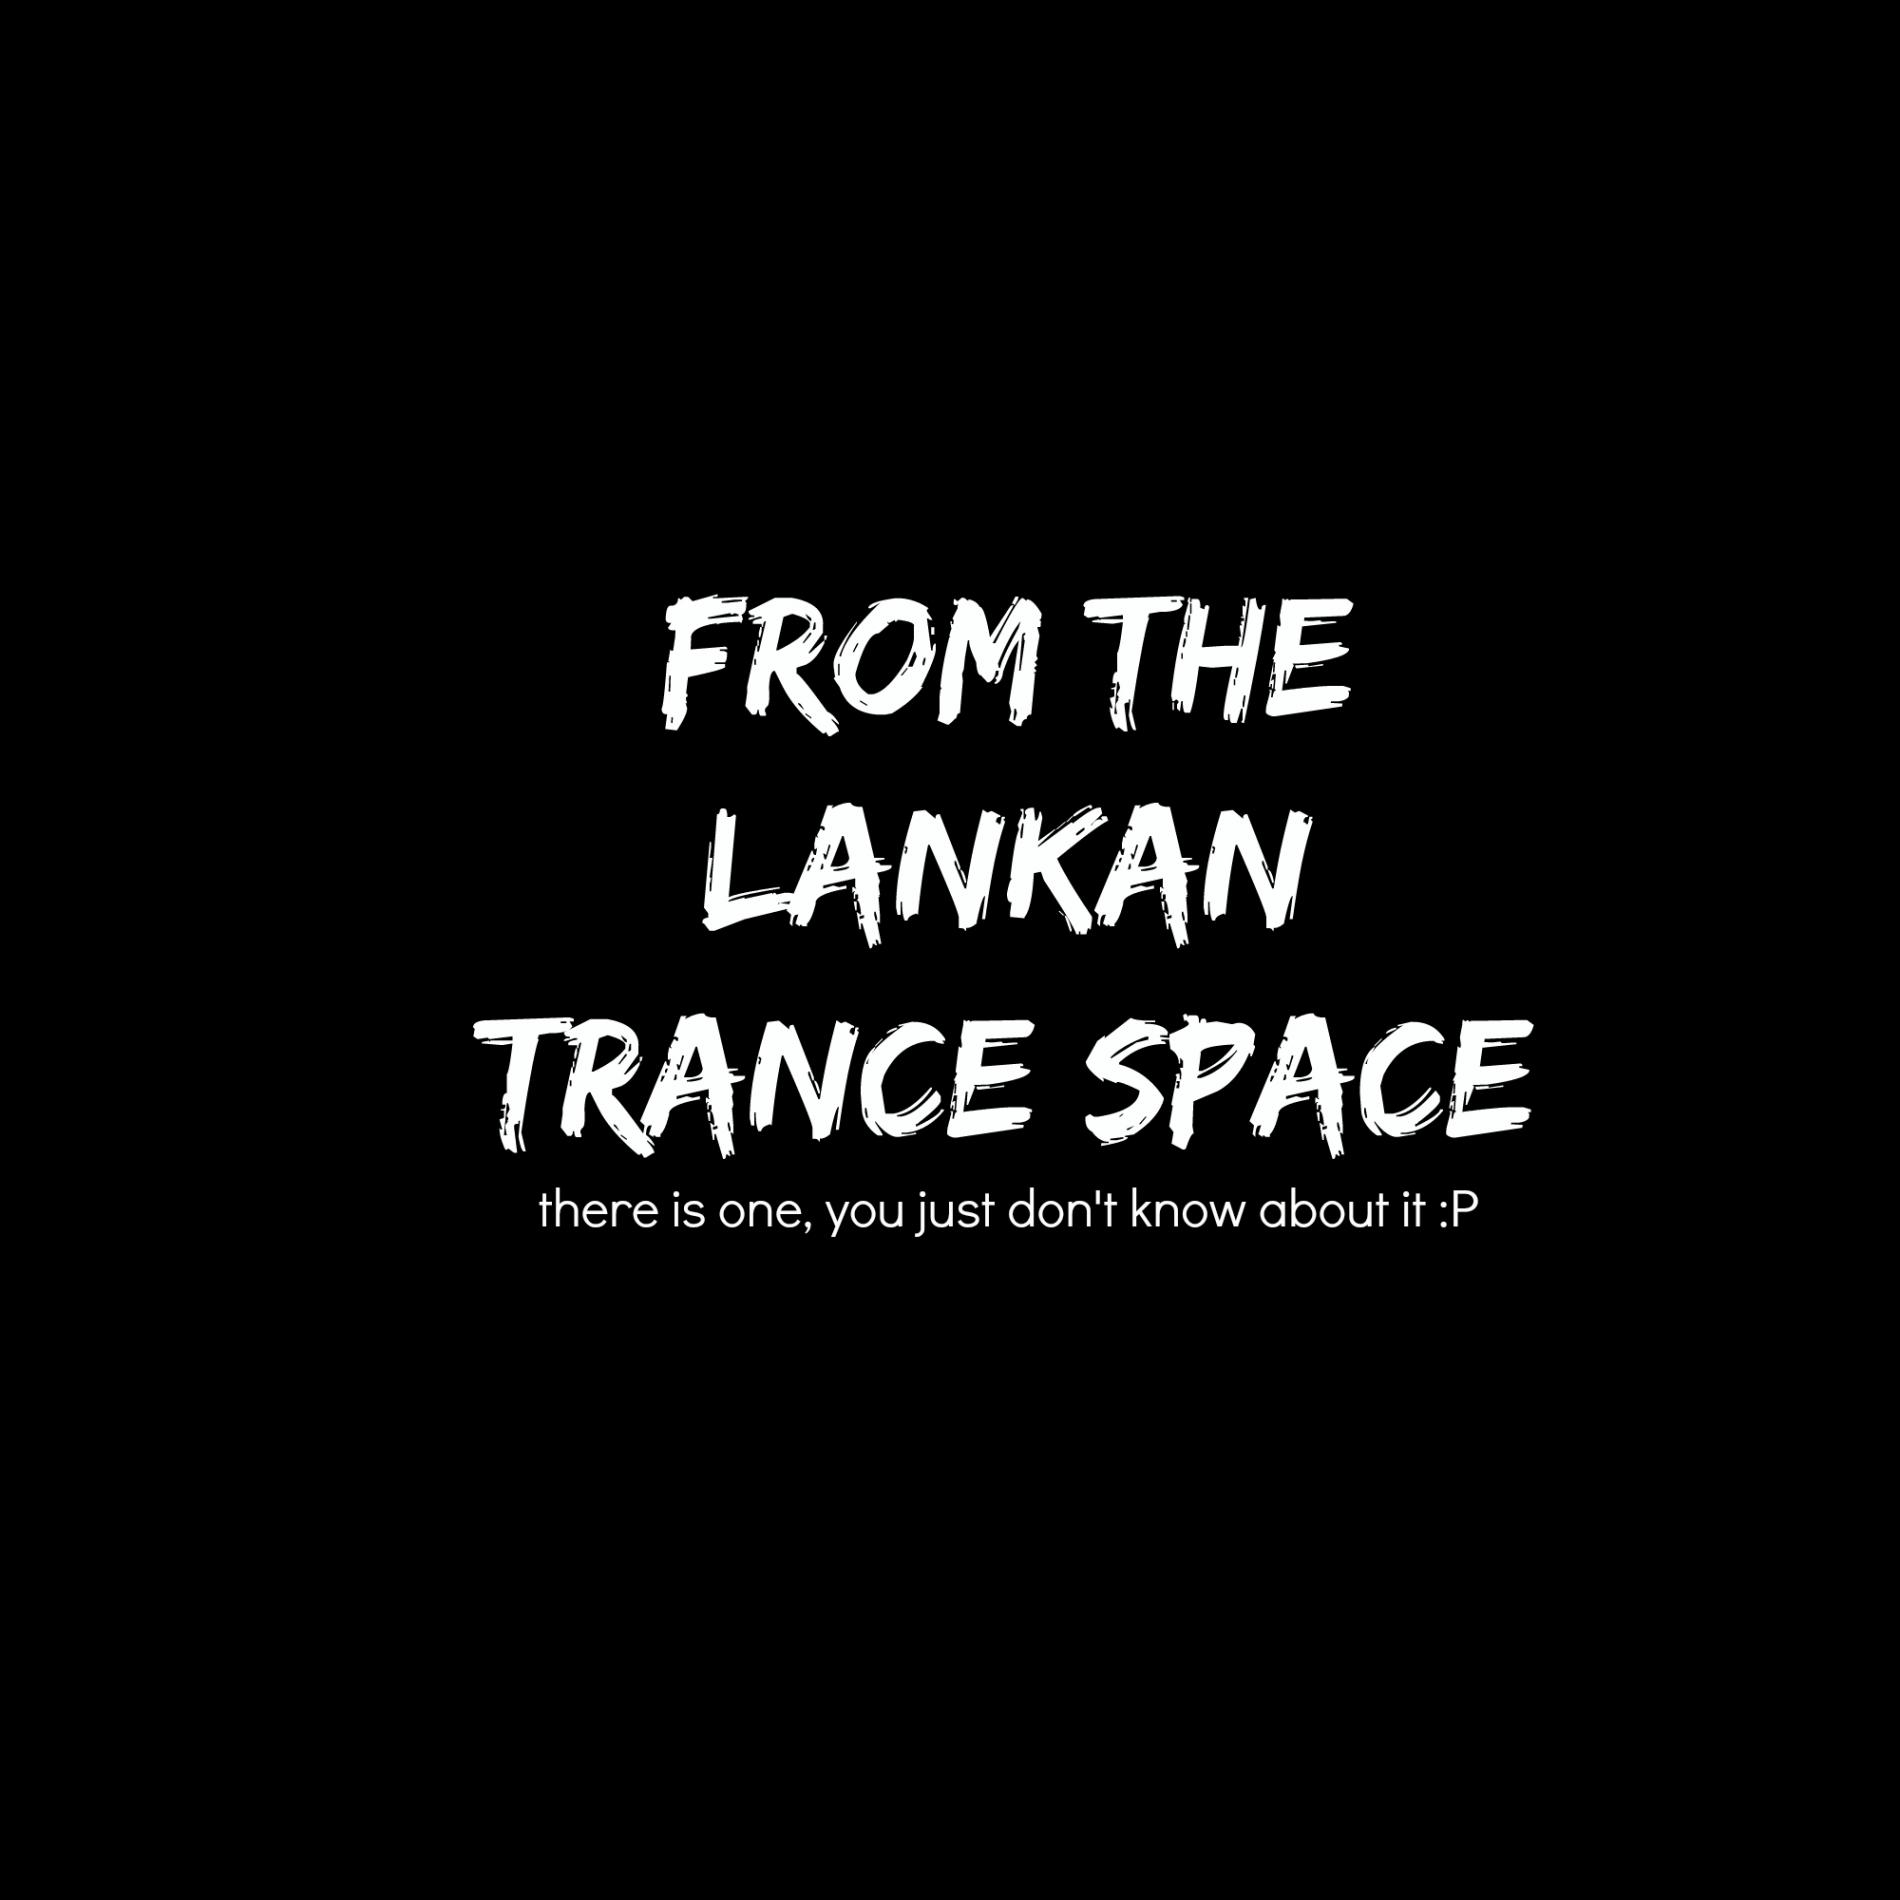 The Trance Space Of Sri Lanka